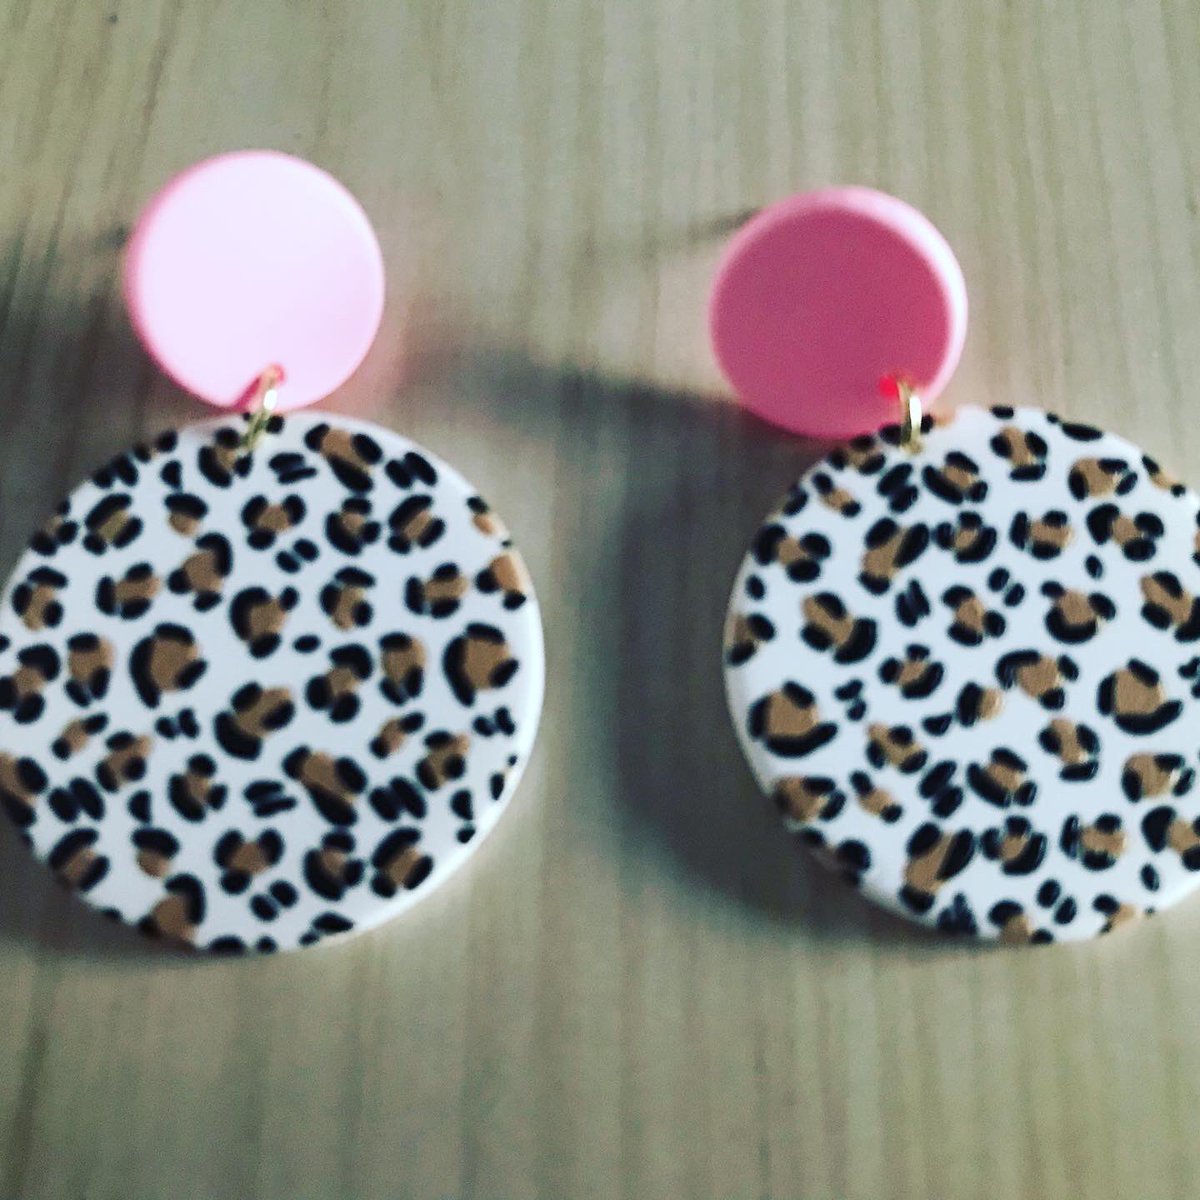 You will be purring 🐈 in these bombshells 
Pink leopard print disc earrings available now …..

#etsysmallbusinessowner #etsyuk #etsy #etsyshop #etsyseller #etsyfinds #etsysellersofinstagram #etsystore #etsyjewelry #etsysellers #etsylove #etsygifts #etsyjewellery #etsyearrings